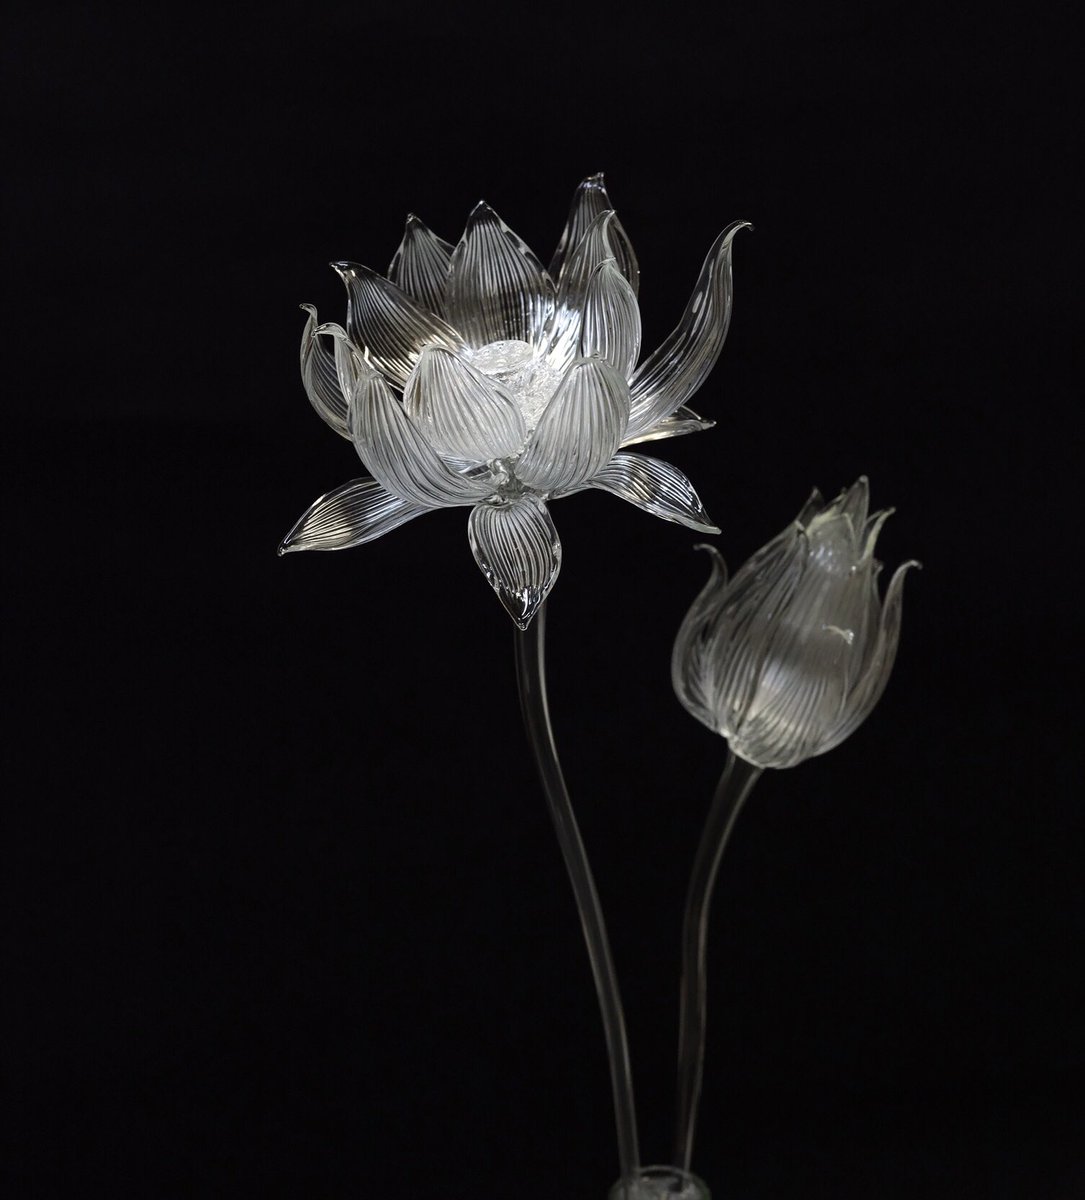 Uzivatel Utsusemi Glass Sculpture Na Twitteru 梅雨といえば蓮の花作るよ 静かな佇まいになるように生けて 頭が重いので何度か炎で茎を曲げてようやく安定 夏真っ盛りなので涼やかな感じになり これで蓮の花は終了 蓮のはな ハス ランプワーク